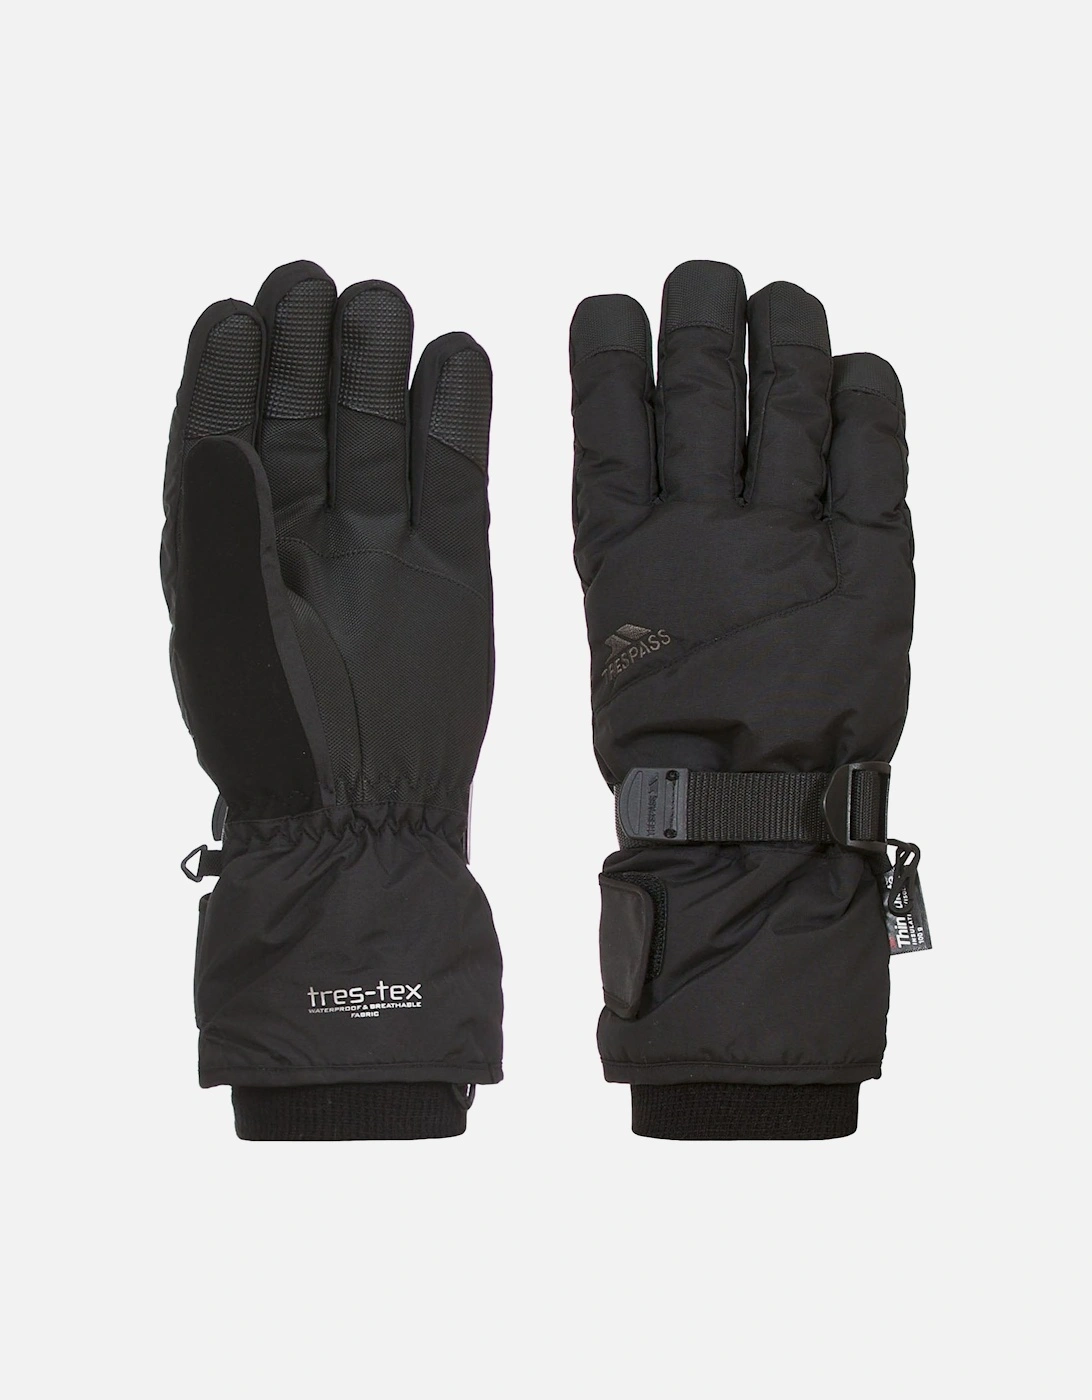 Adults Ergon Ski Skiing Snowboarding Gloves